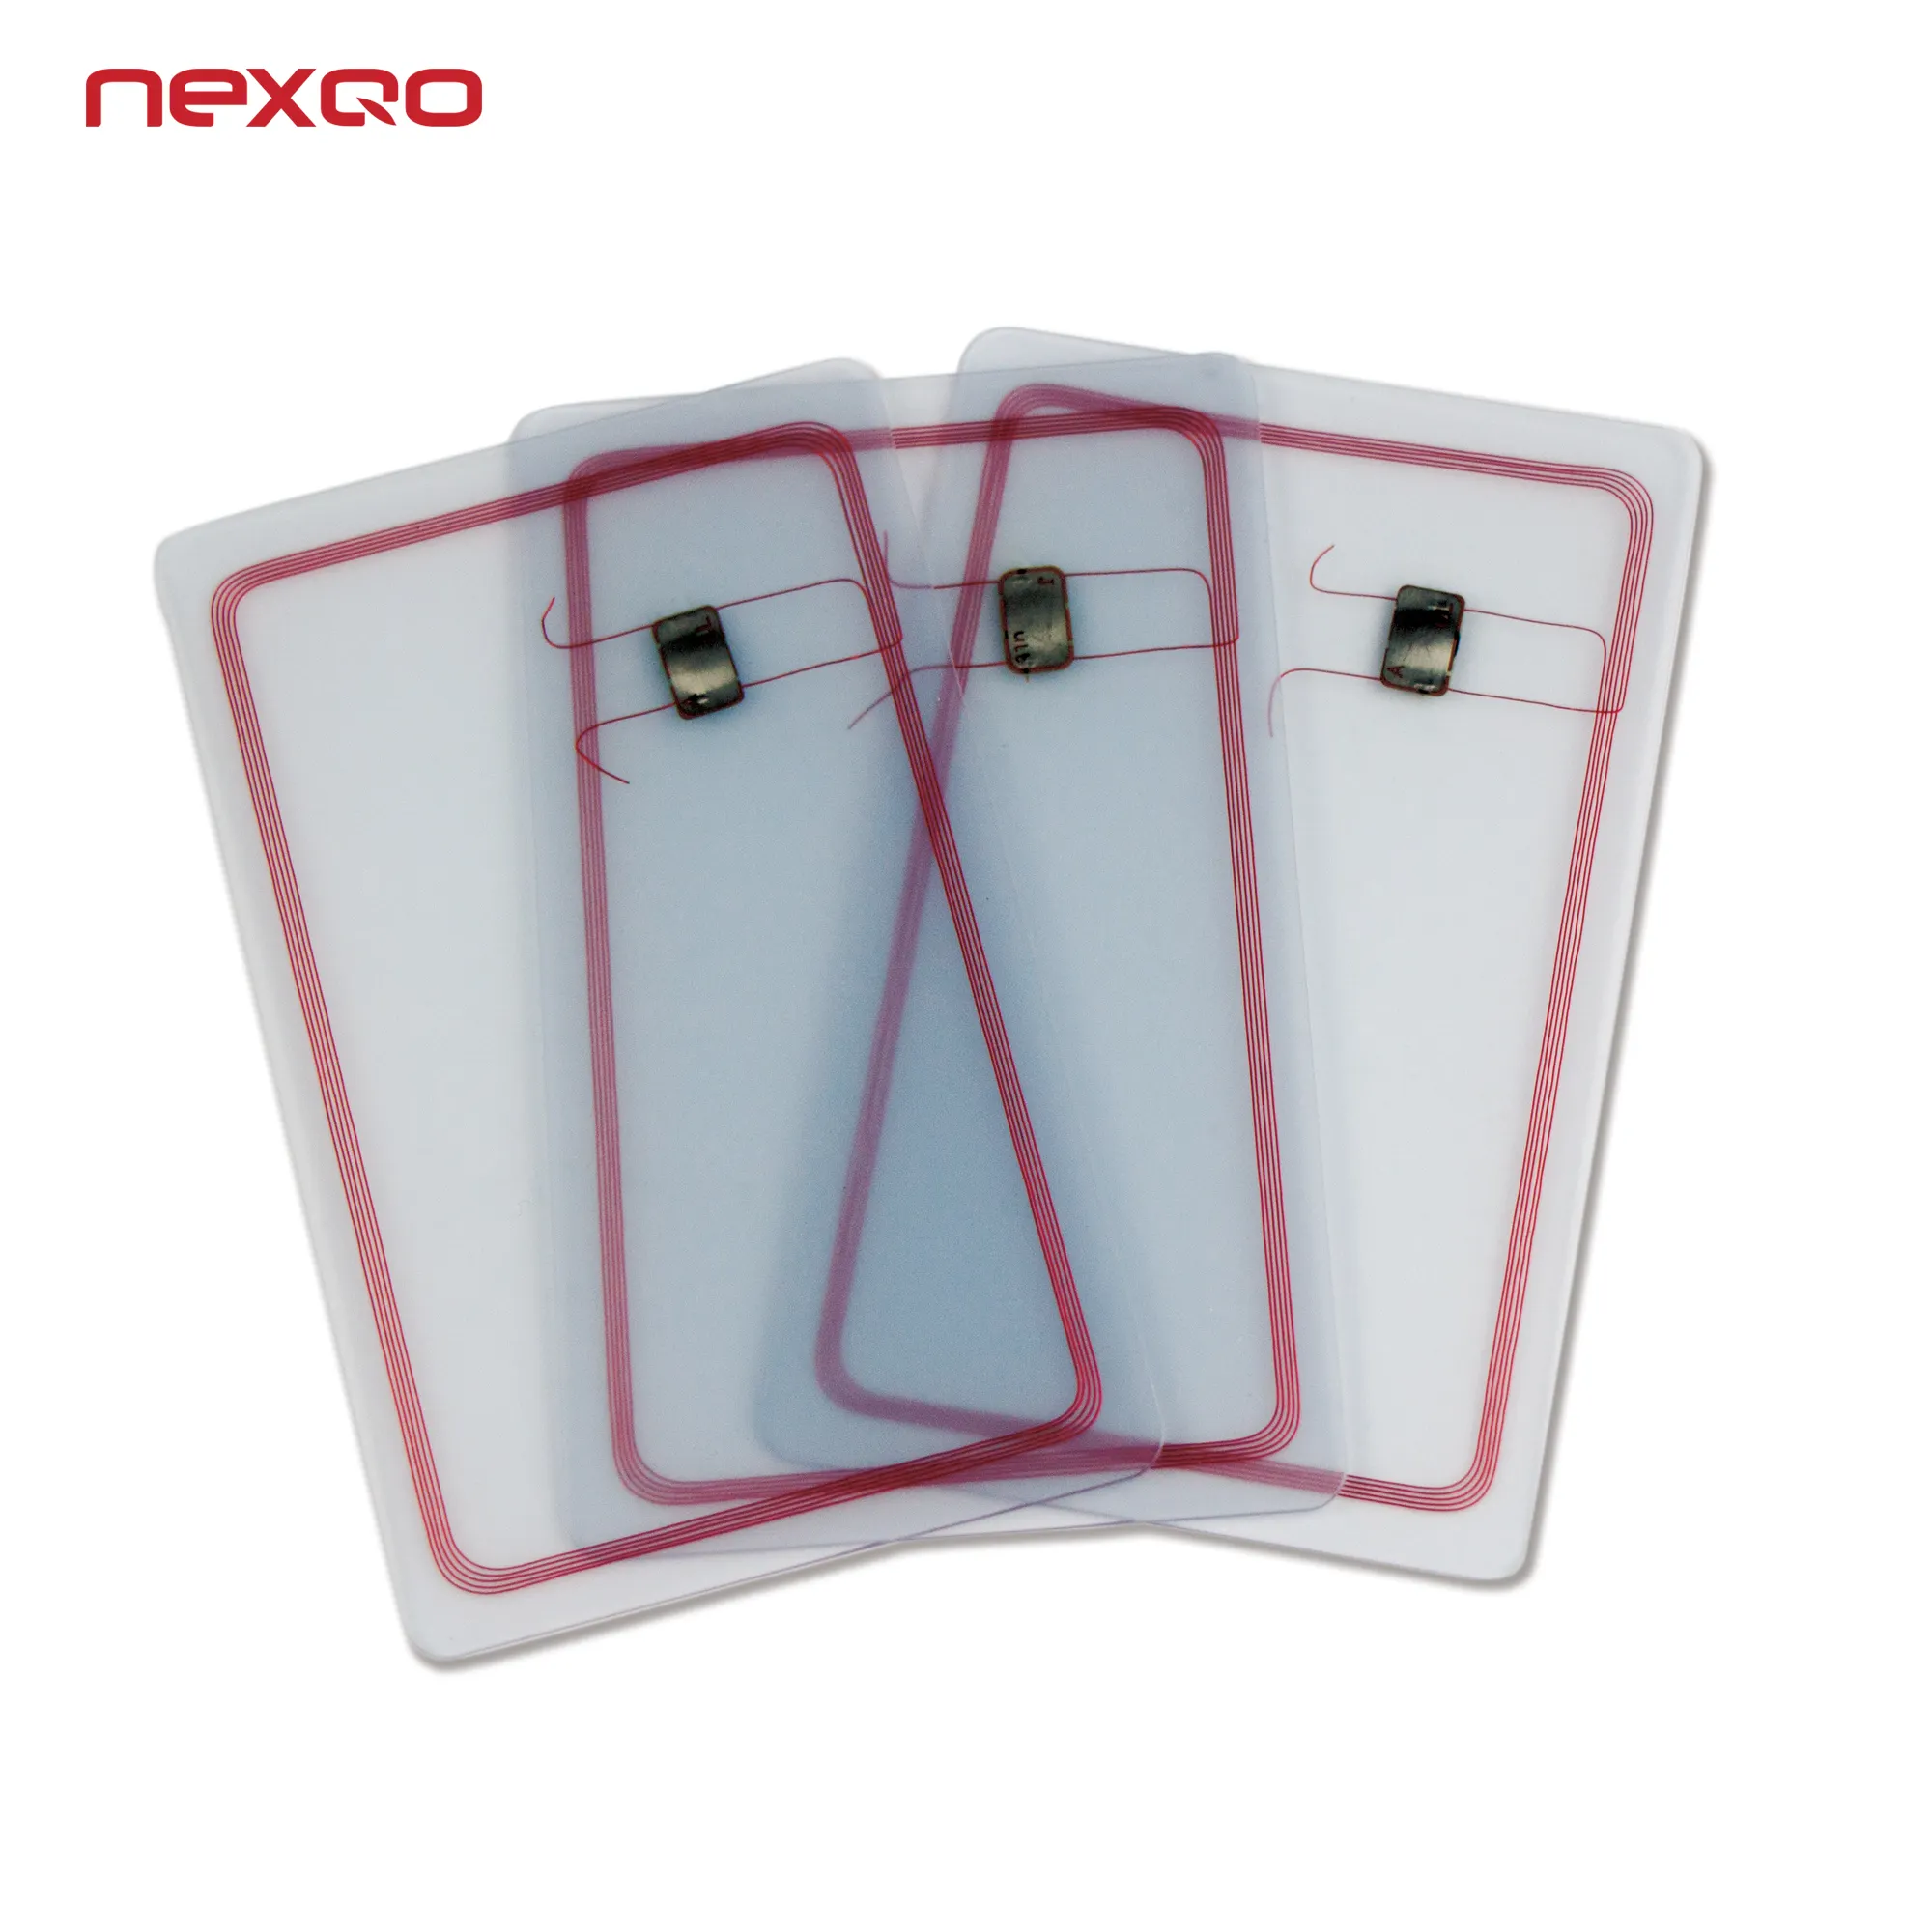 MIFARE ile özel baskı PVC kart şeffaf klasik 1K temizle kart Nex-pvc kart otantik Oem/nexqo 500 adet CN;GUA